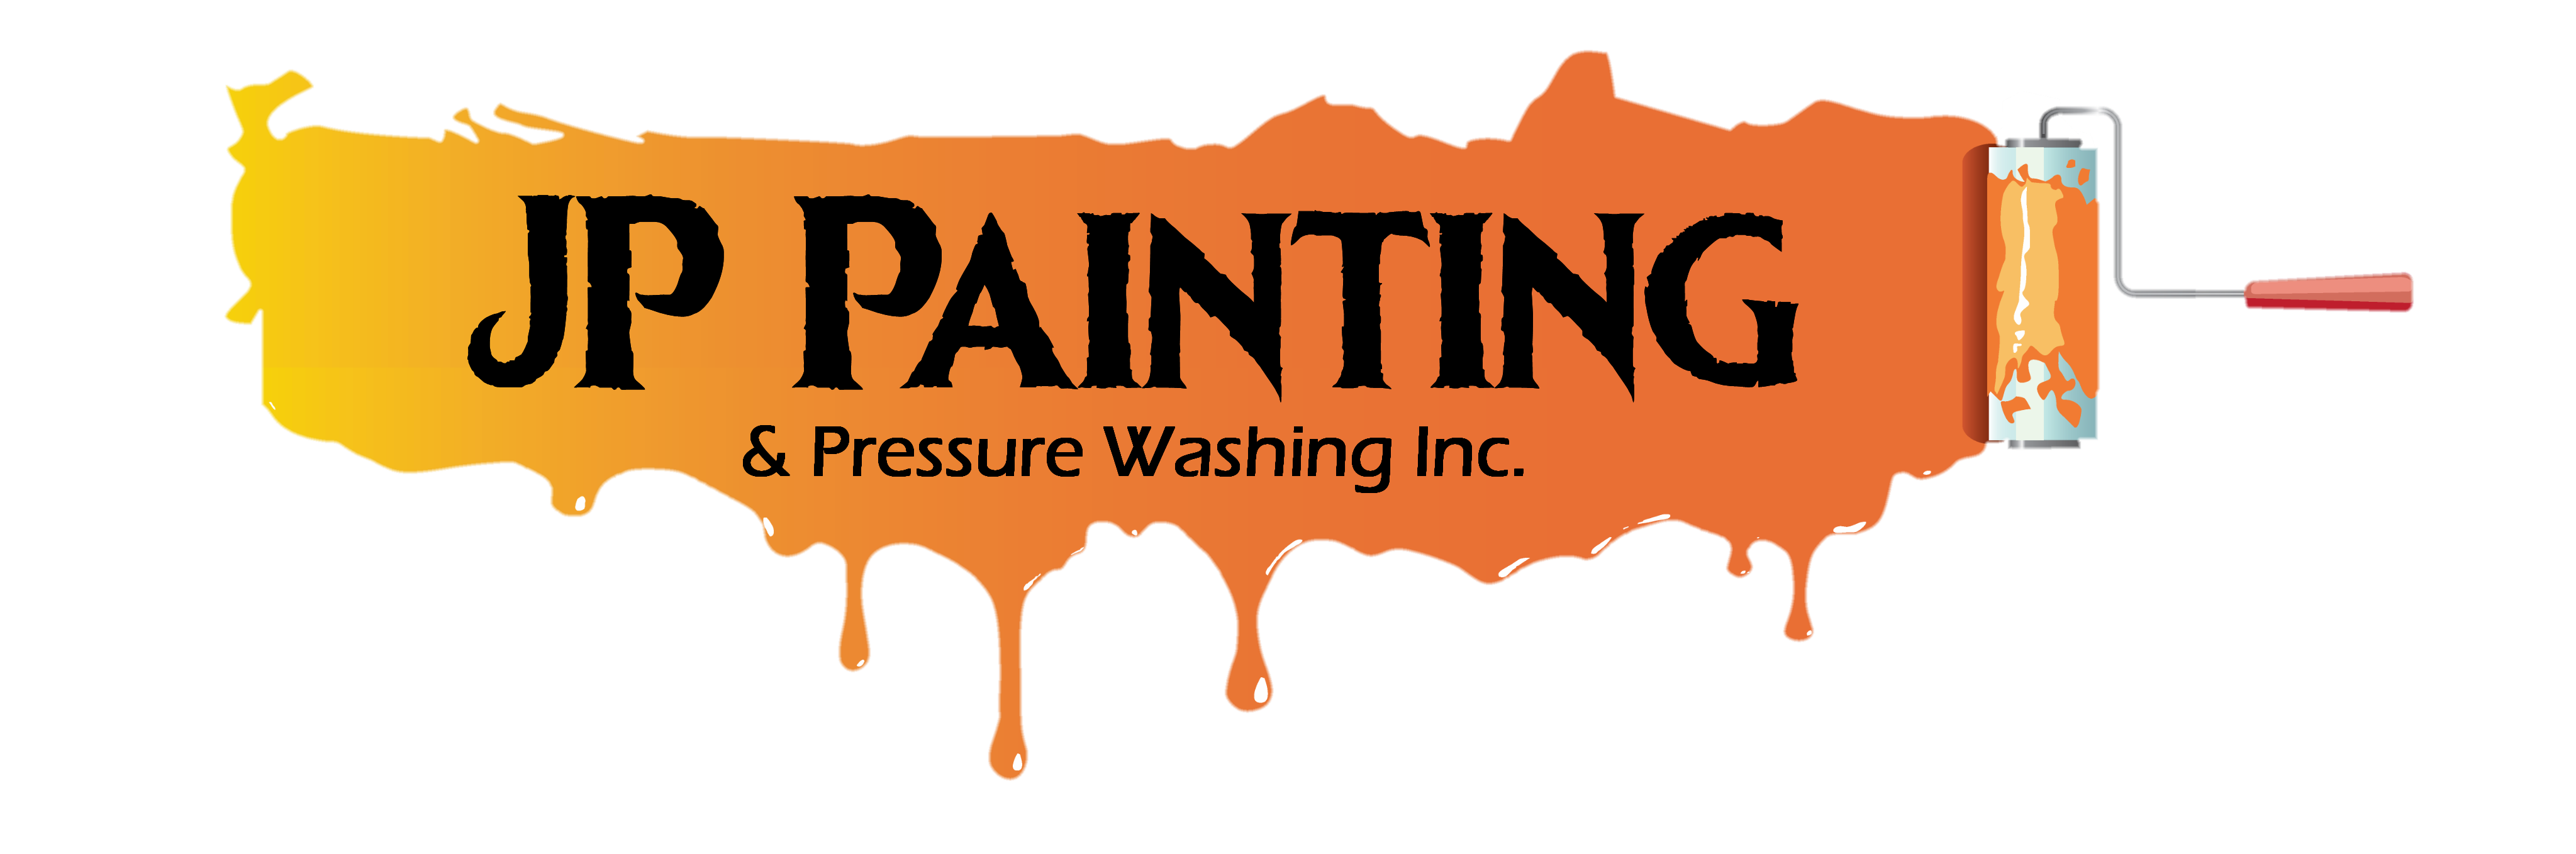 pressure washing and painting logo